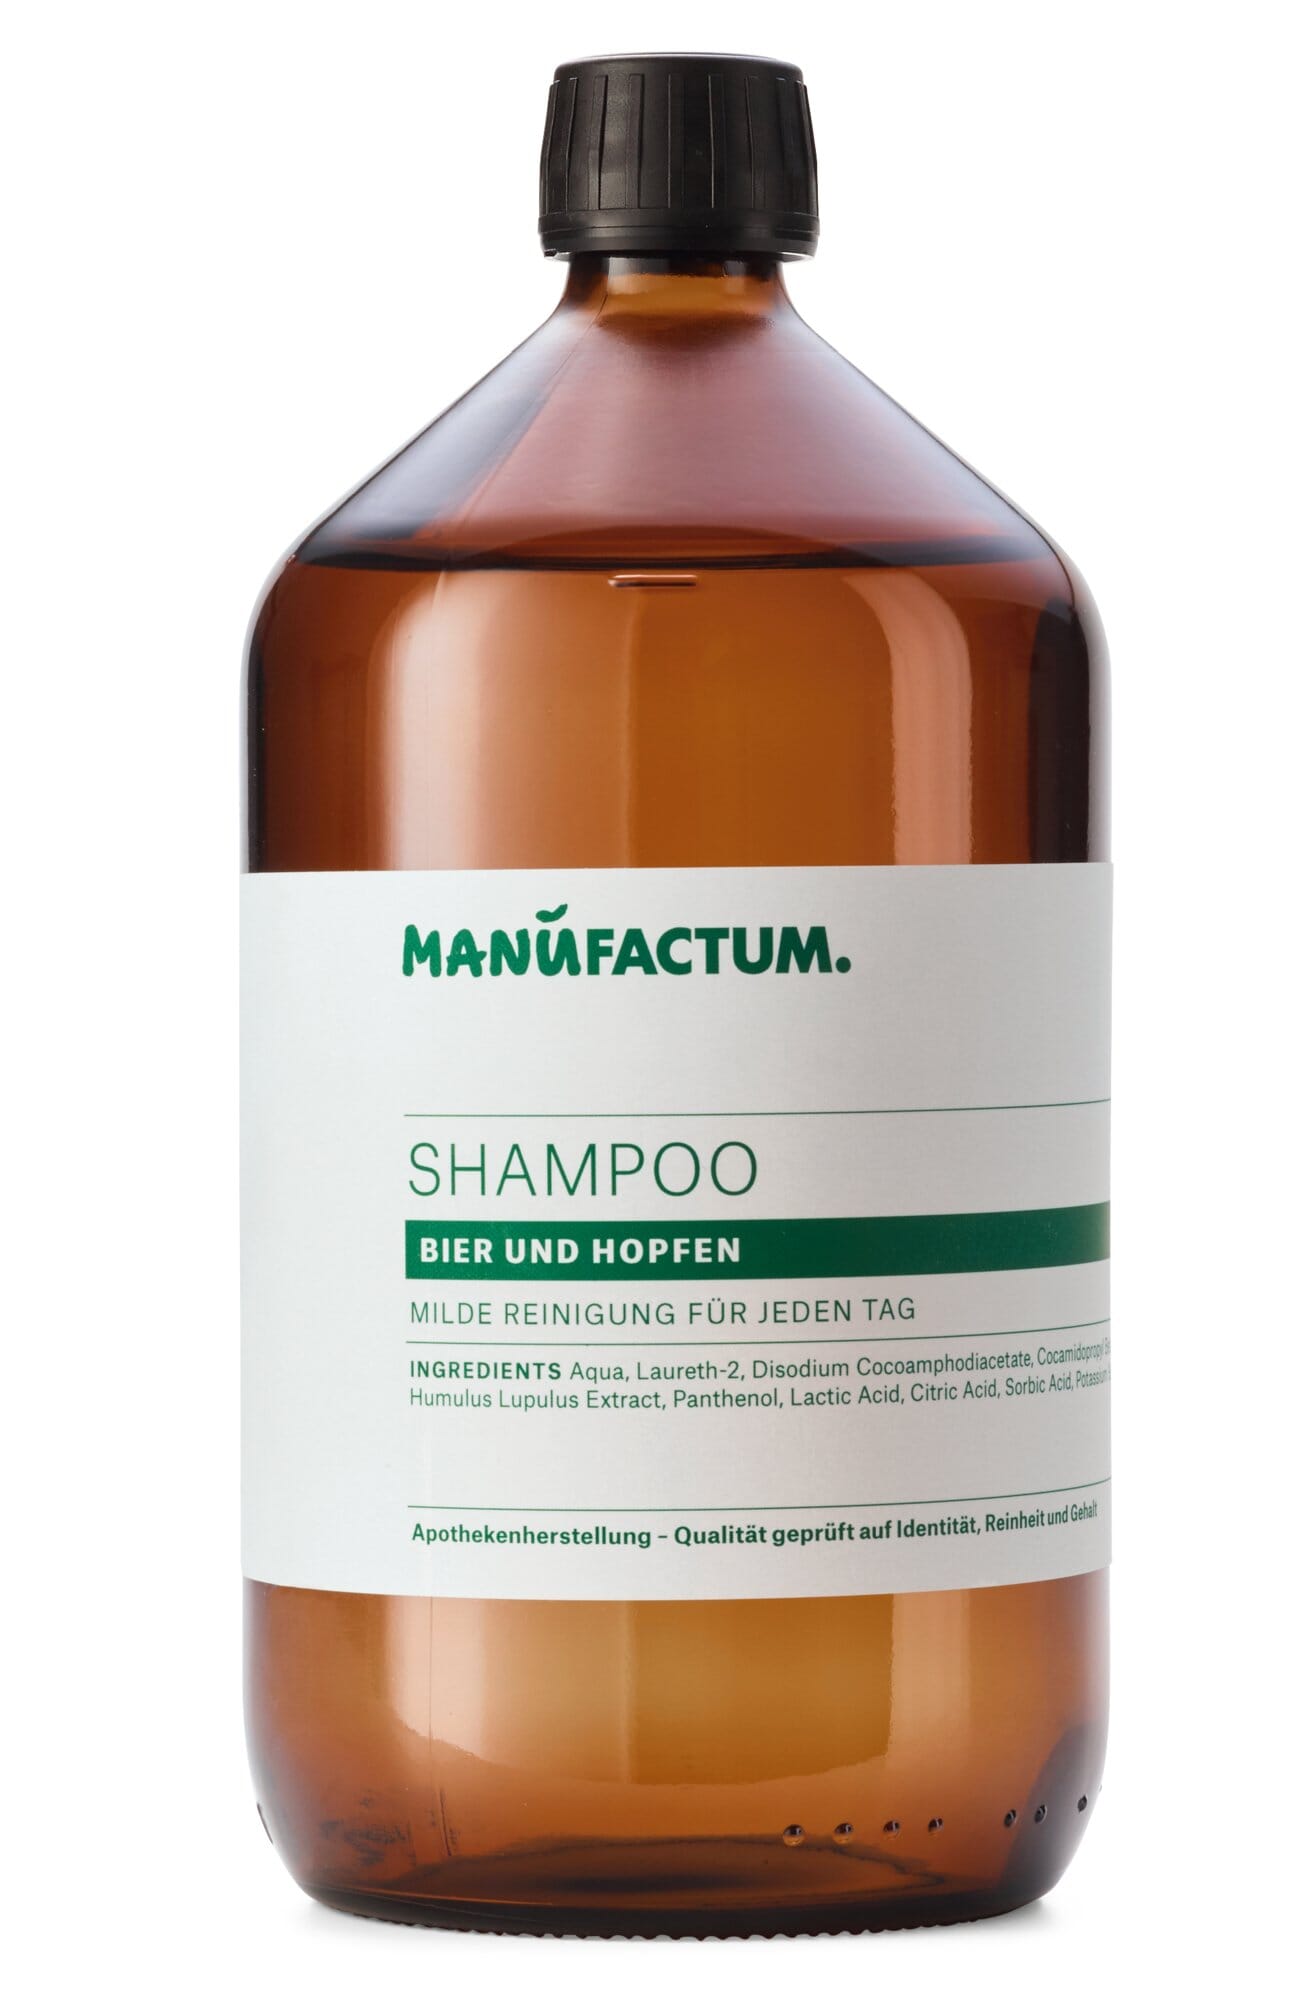 Manufactum shampoo, hops, 1 l bottle Manufactum